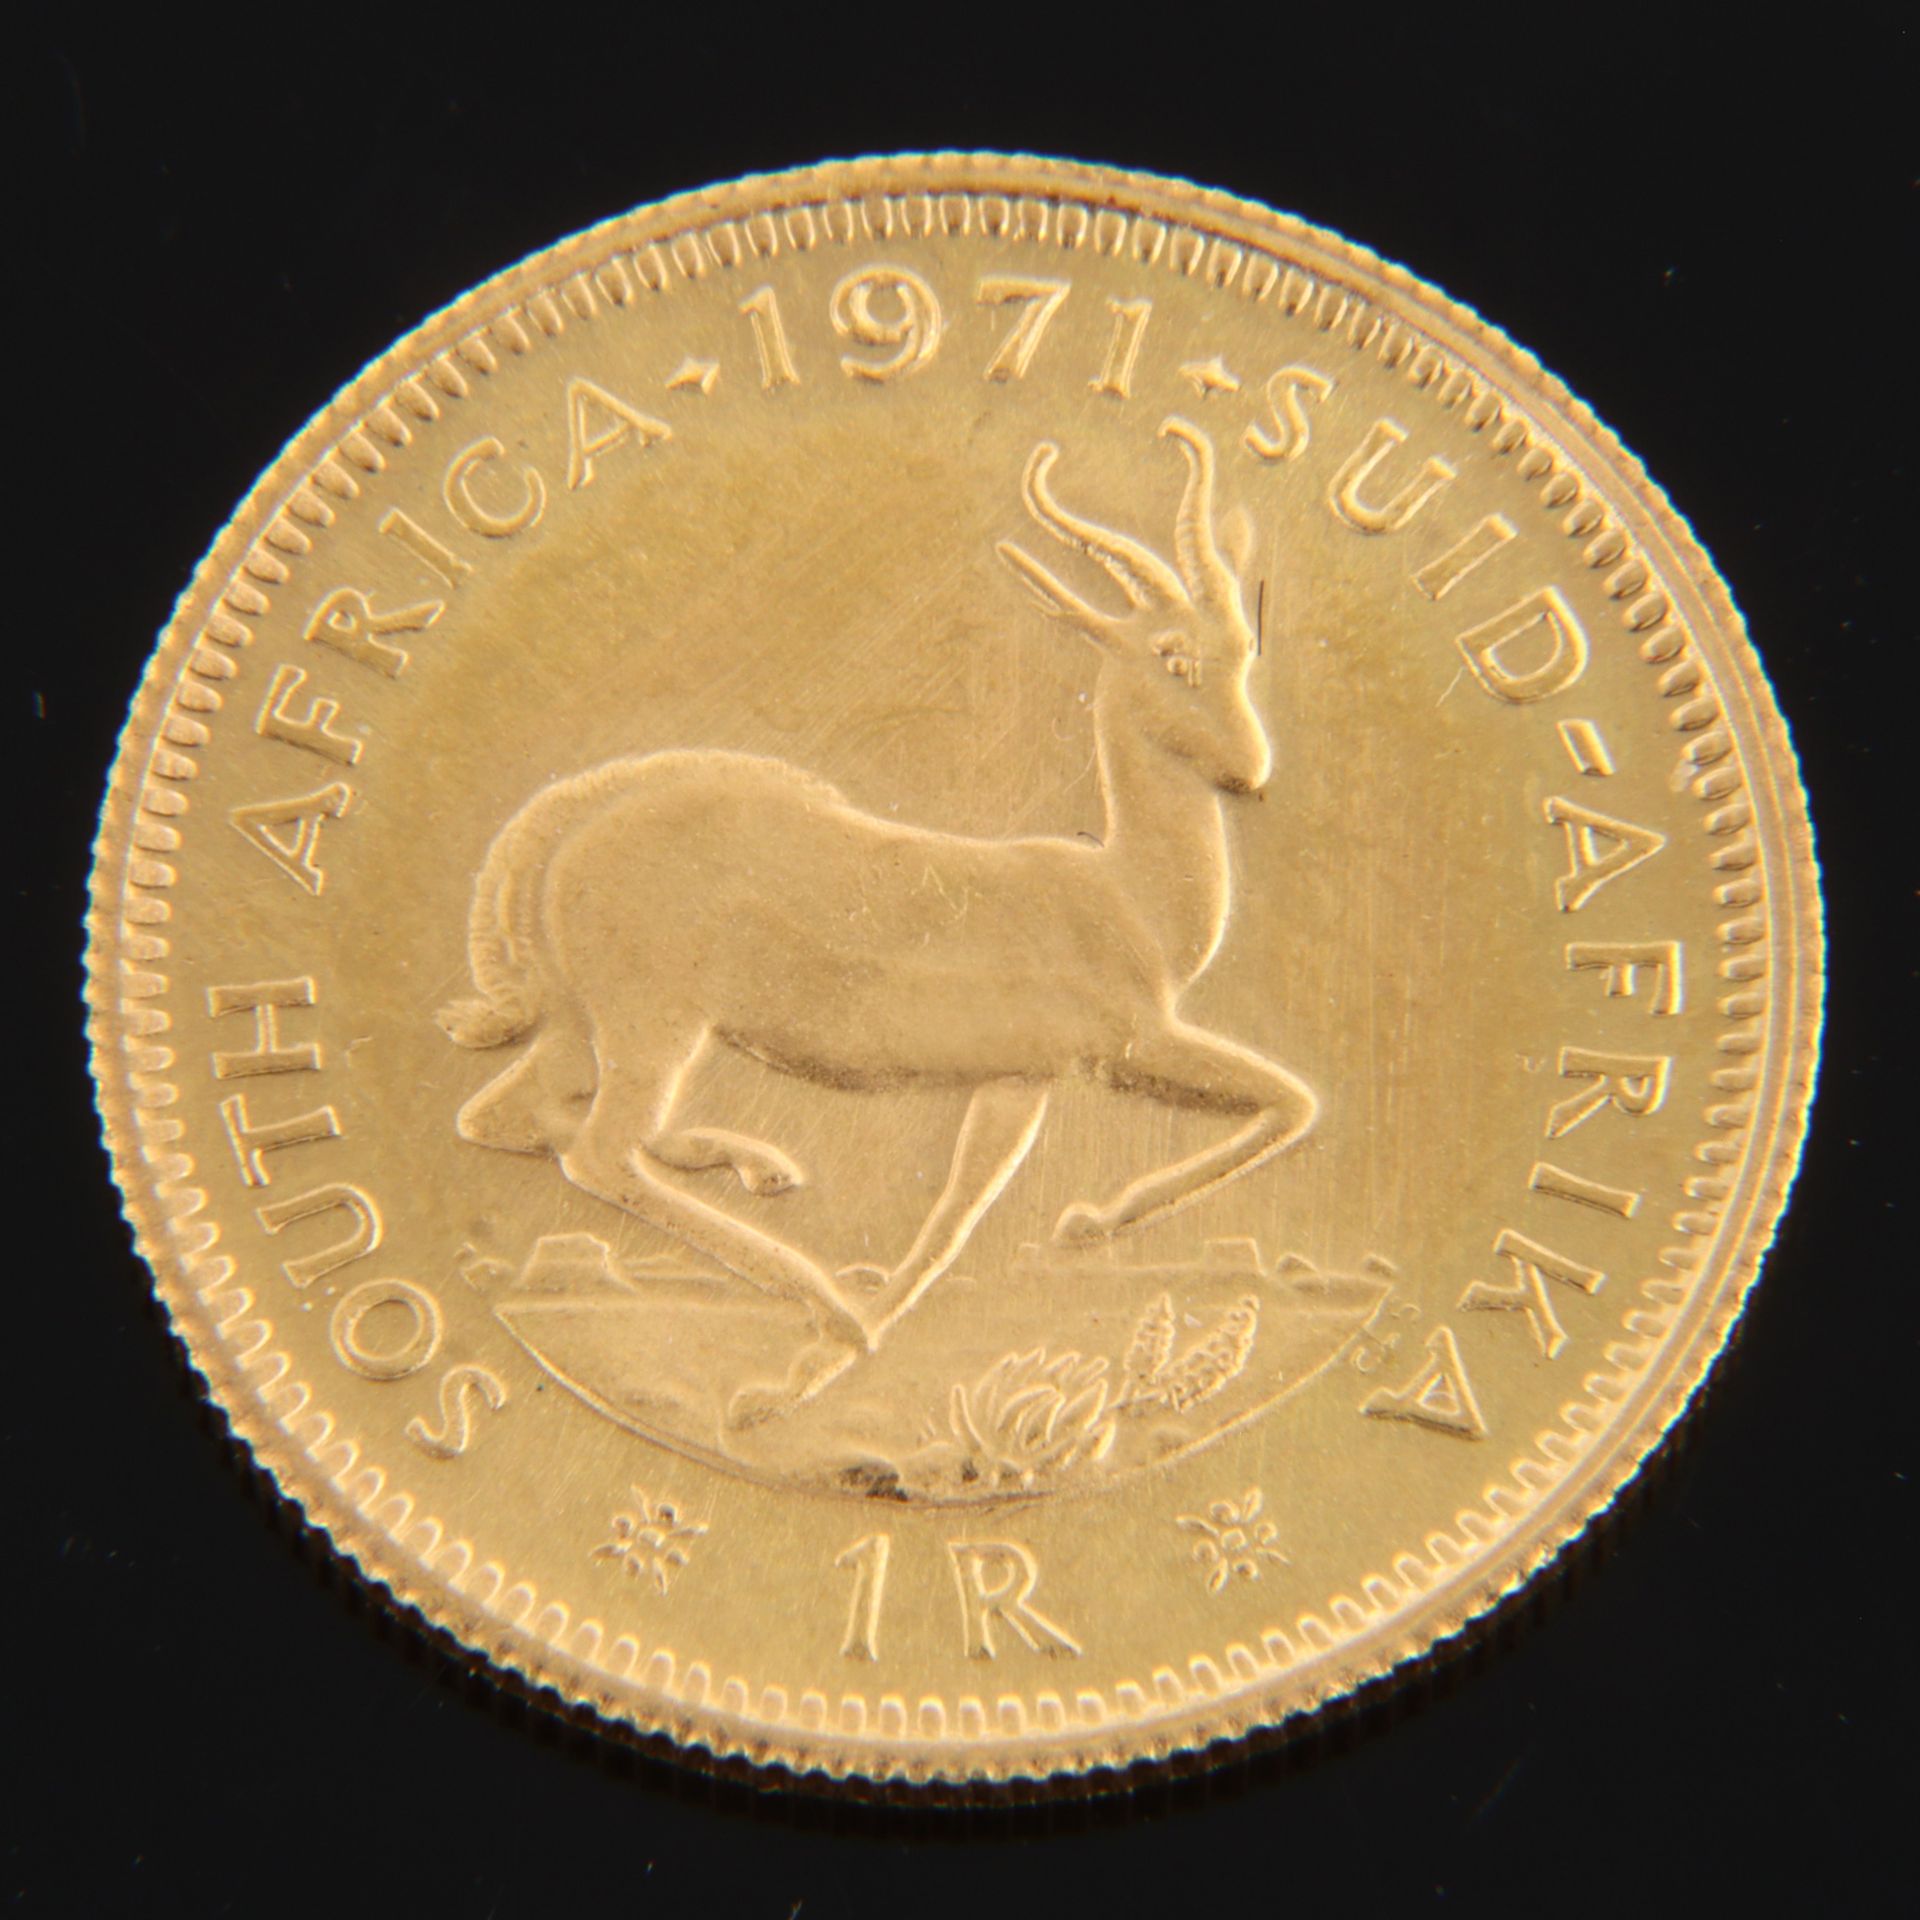 Goldmünze - 1 Rand - Image 2 of 2